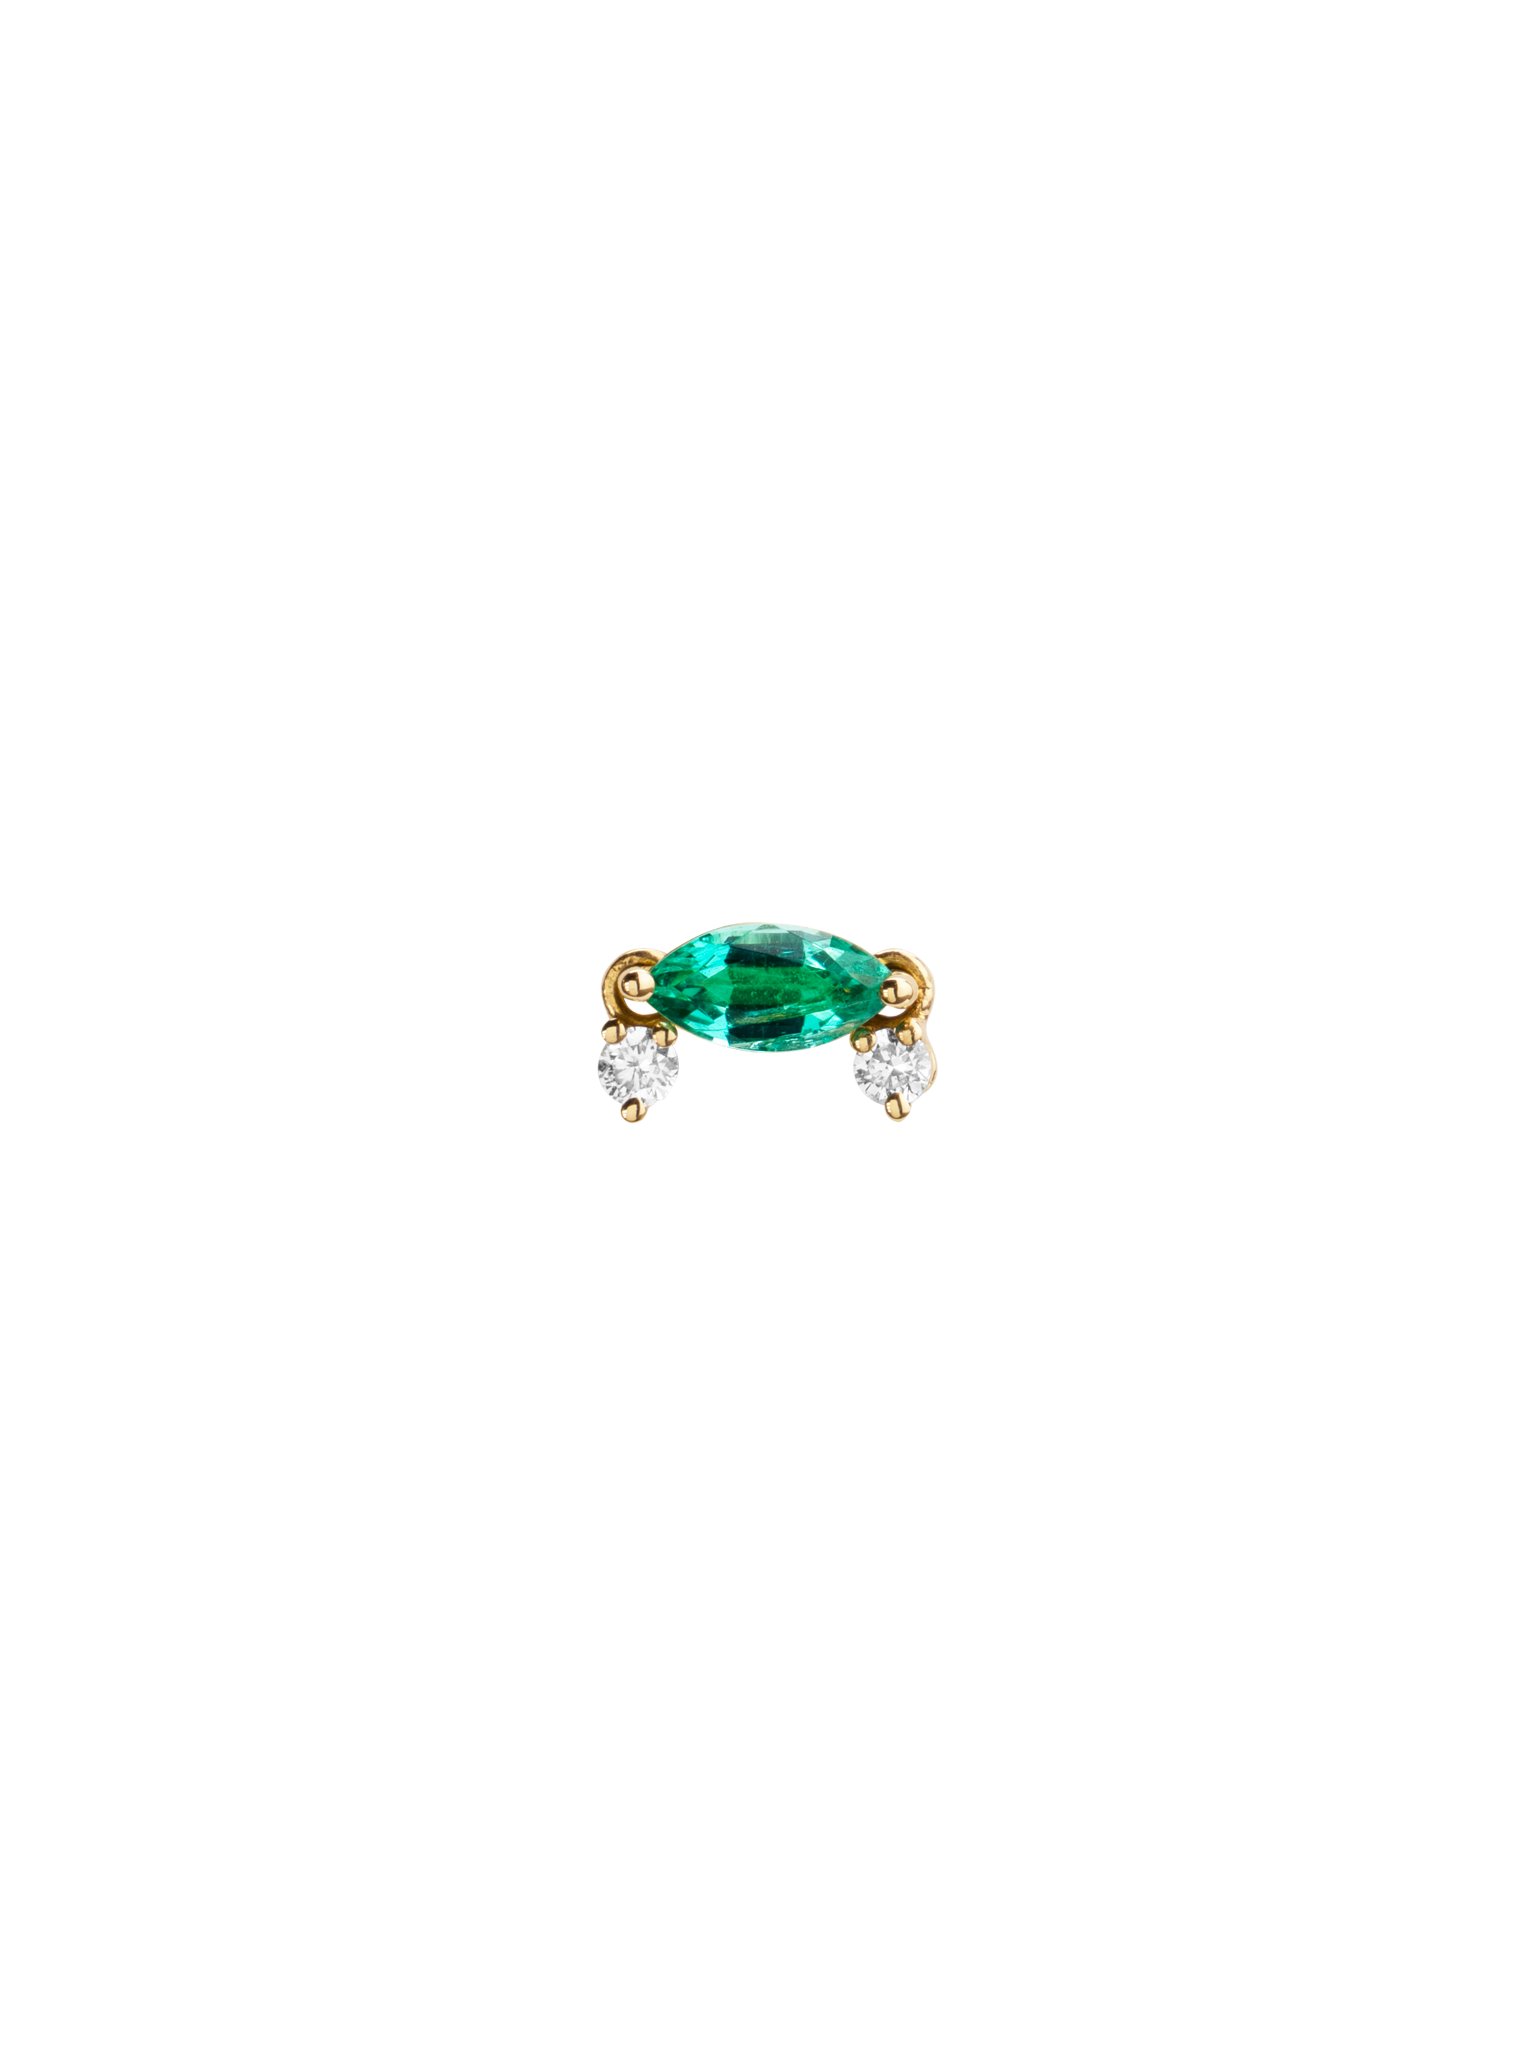 Dancing marquise emerald stud earring